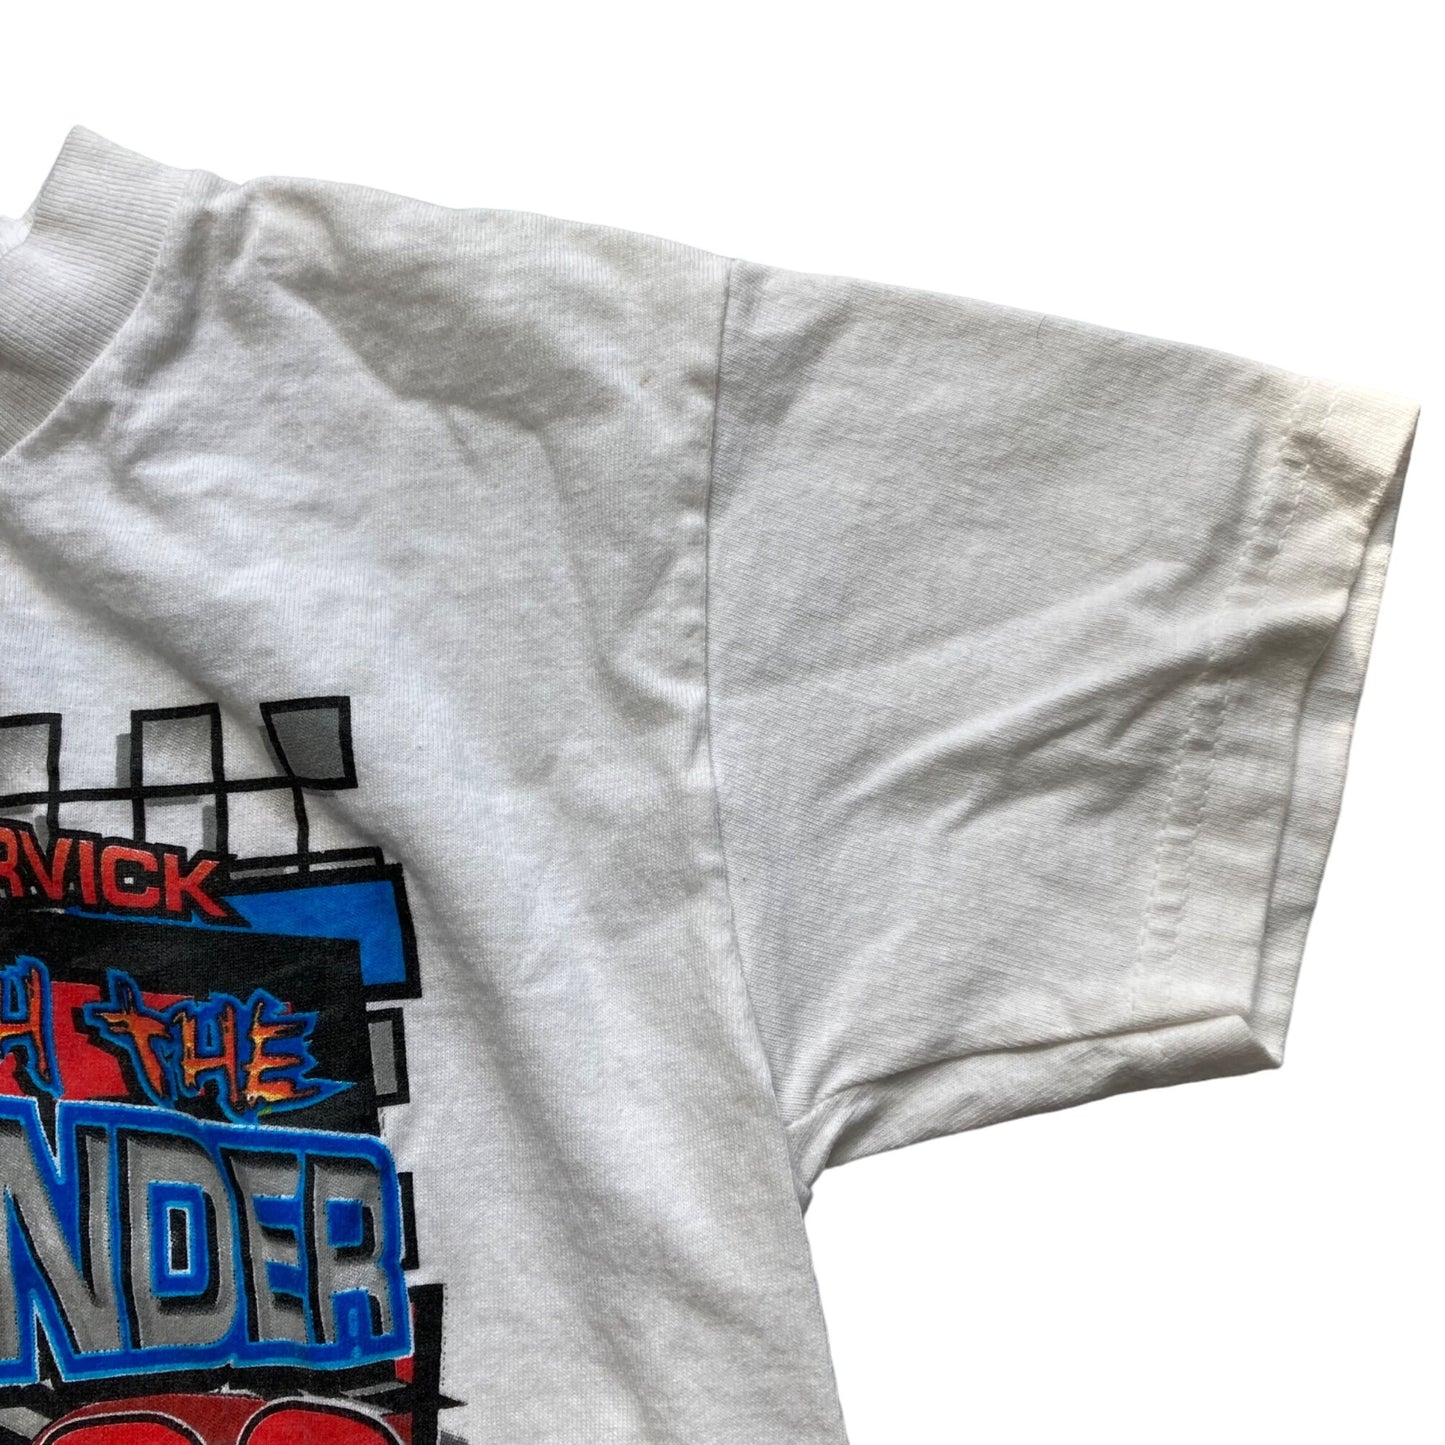 Vintage NASCAR Kevin Harvick #29 Unleash the Thunder T-Shirt Youth Size S 6-8